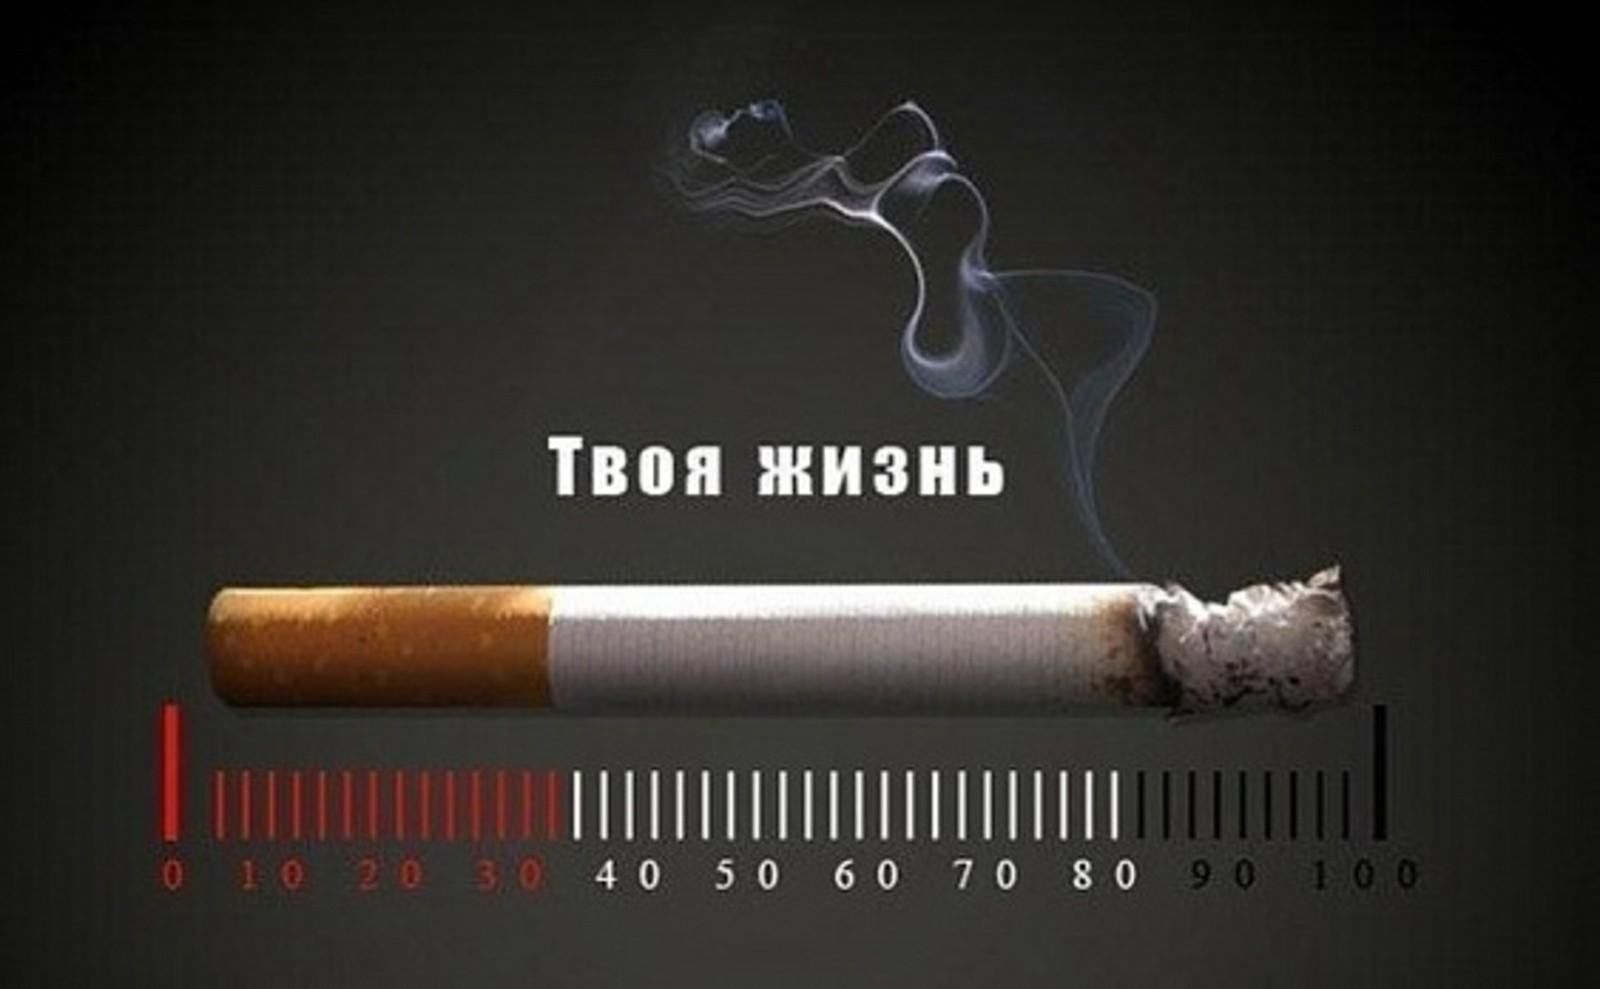 Социальная реклама курение. Реклама о вреде курения. Против курения. Соц реклама о вреде курения.